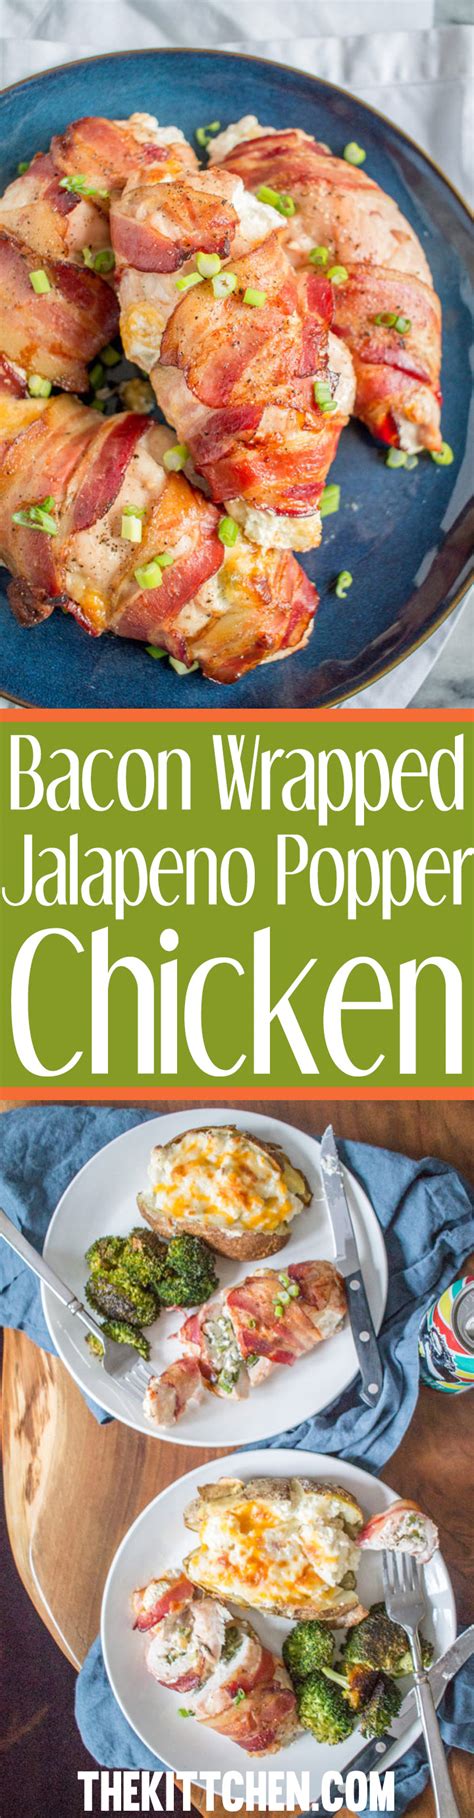 Bacon Wrapped Jalapeño Popper Chicken Thekittchen